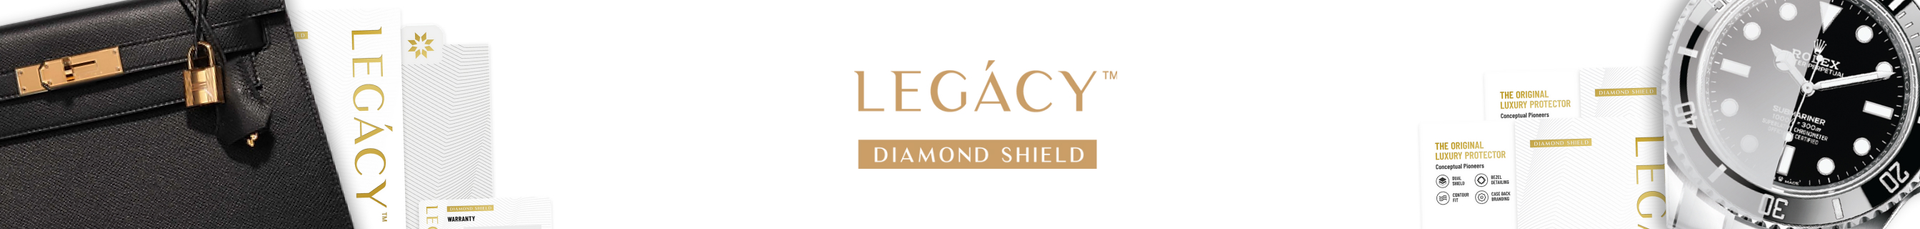 Legacy Diamond Shield